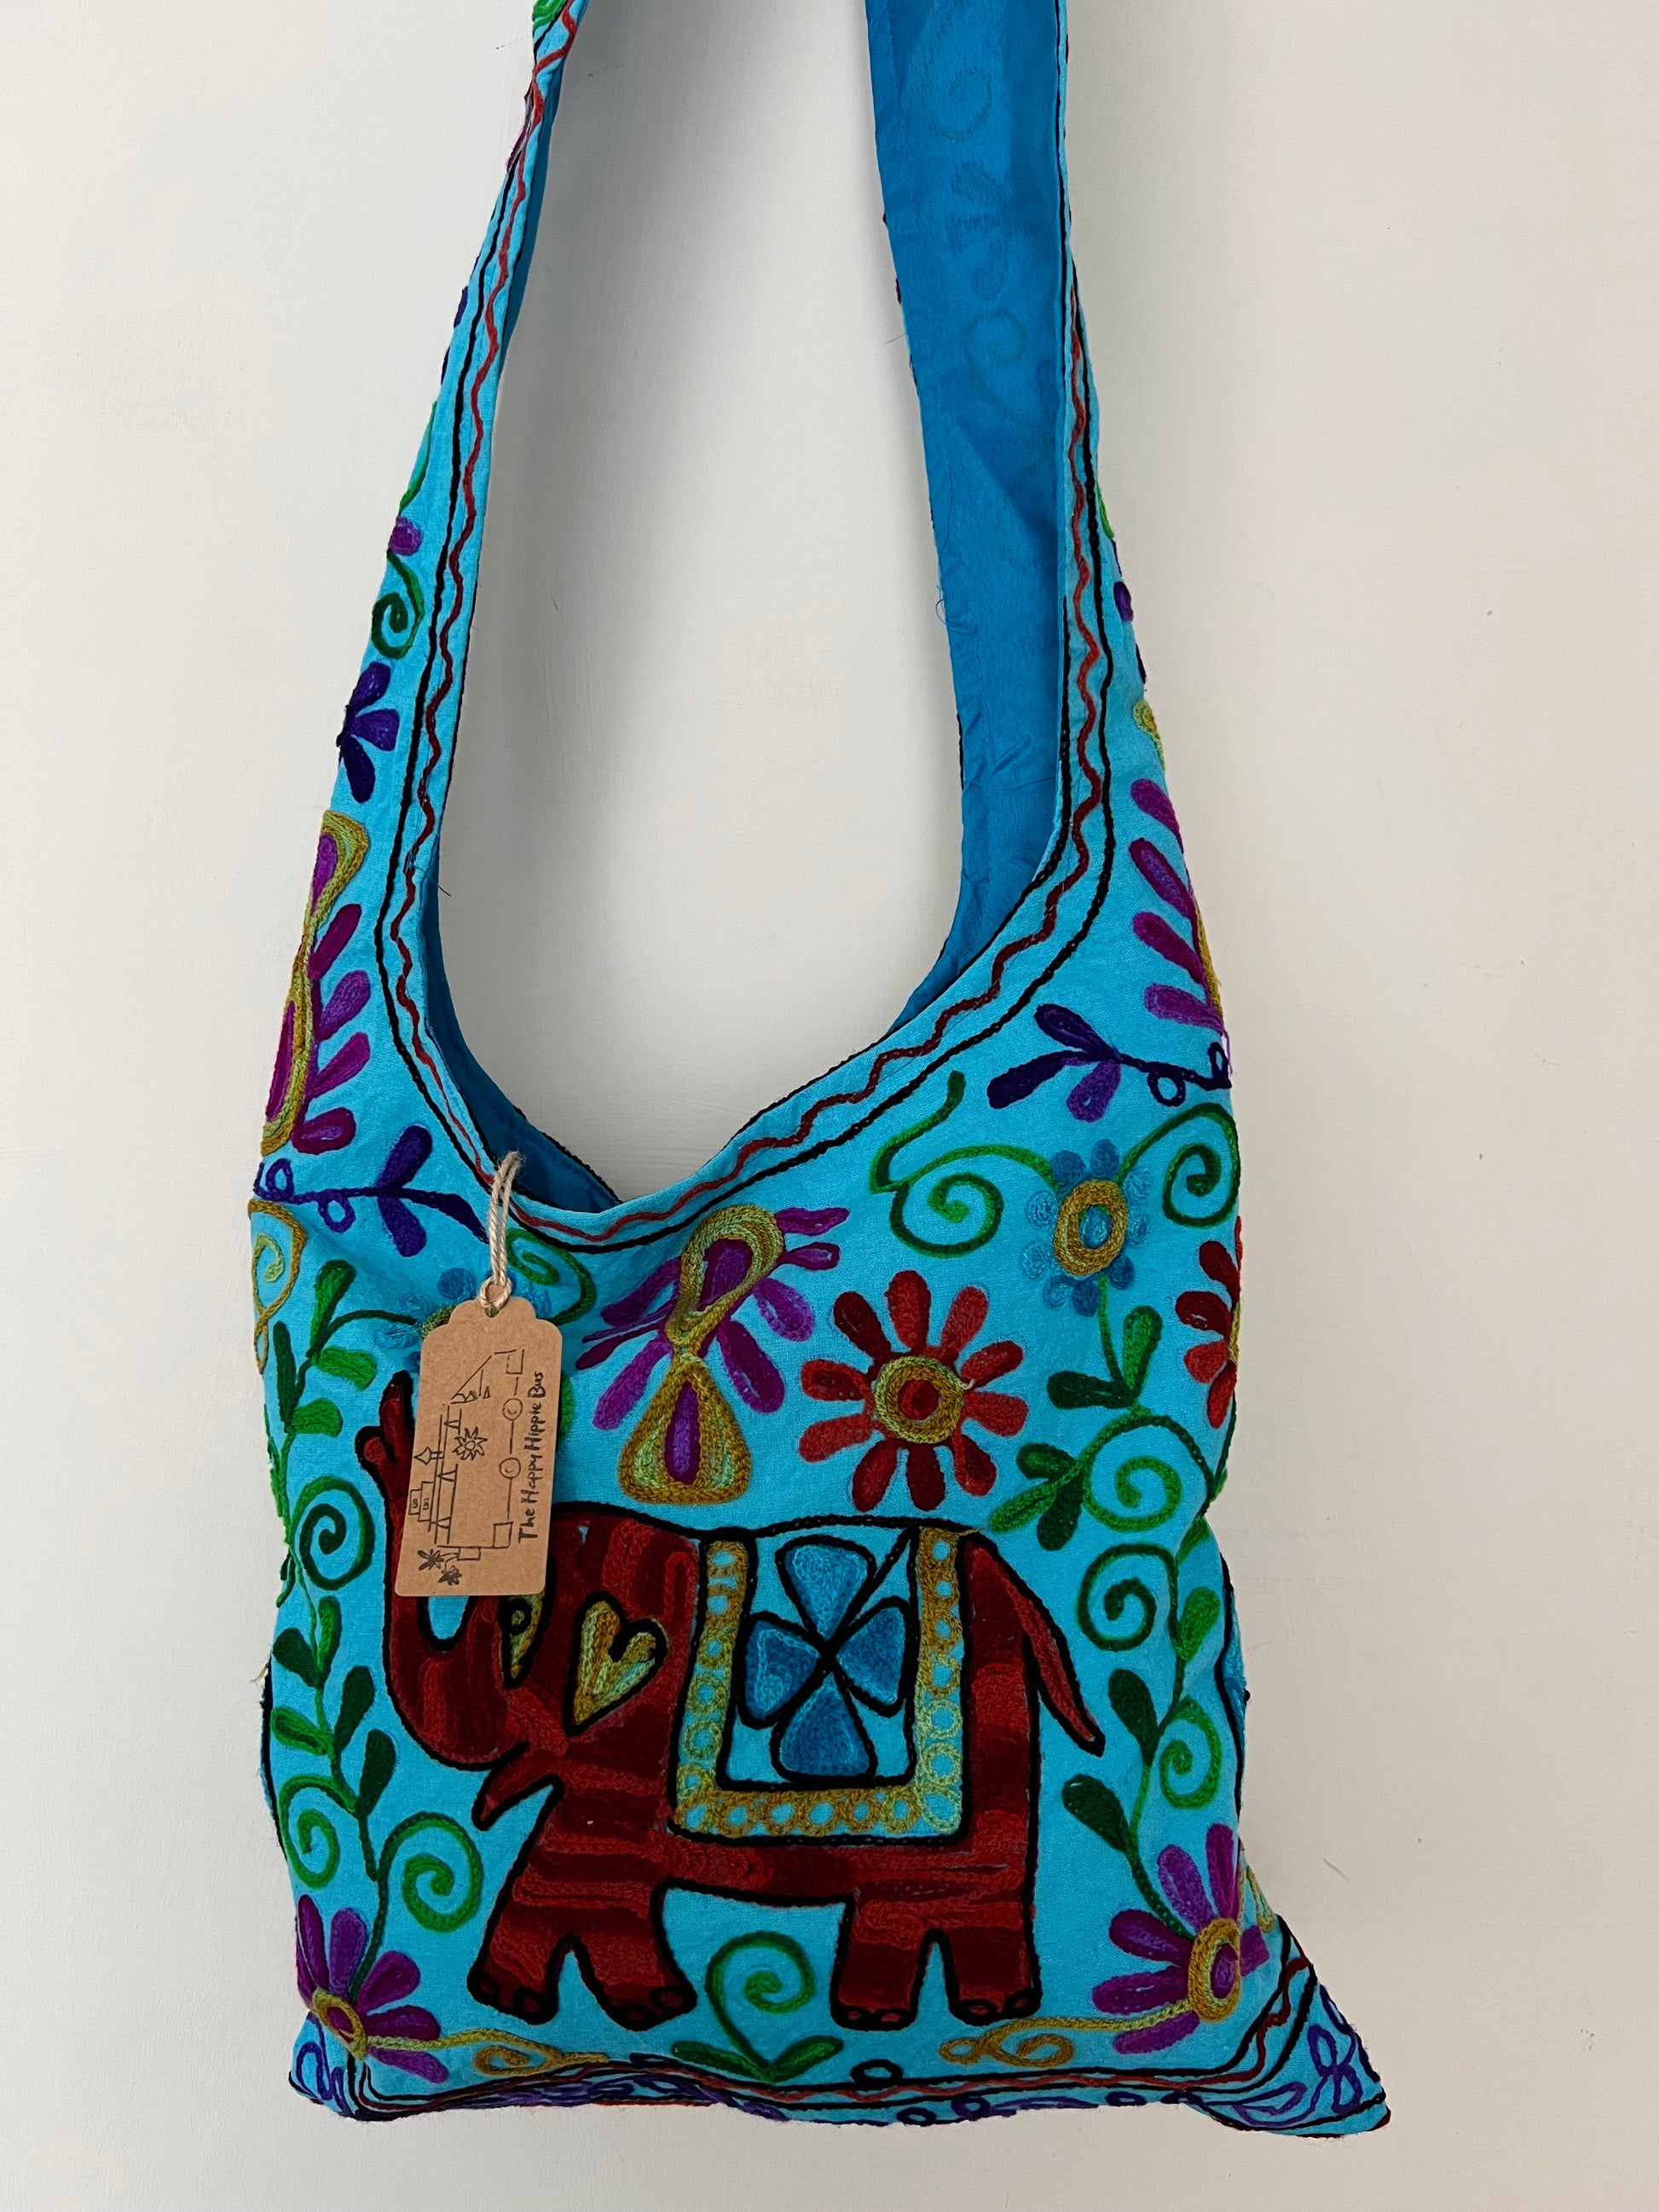 Handmade, Fair Trade, Embroidered, Indian, Elephant, Hippie, Bohemian Shoulder Bag, Blue